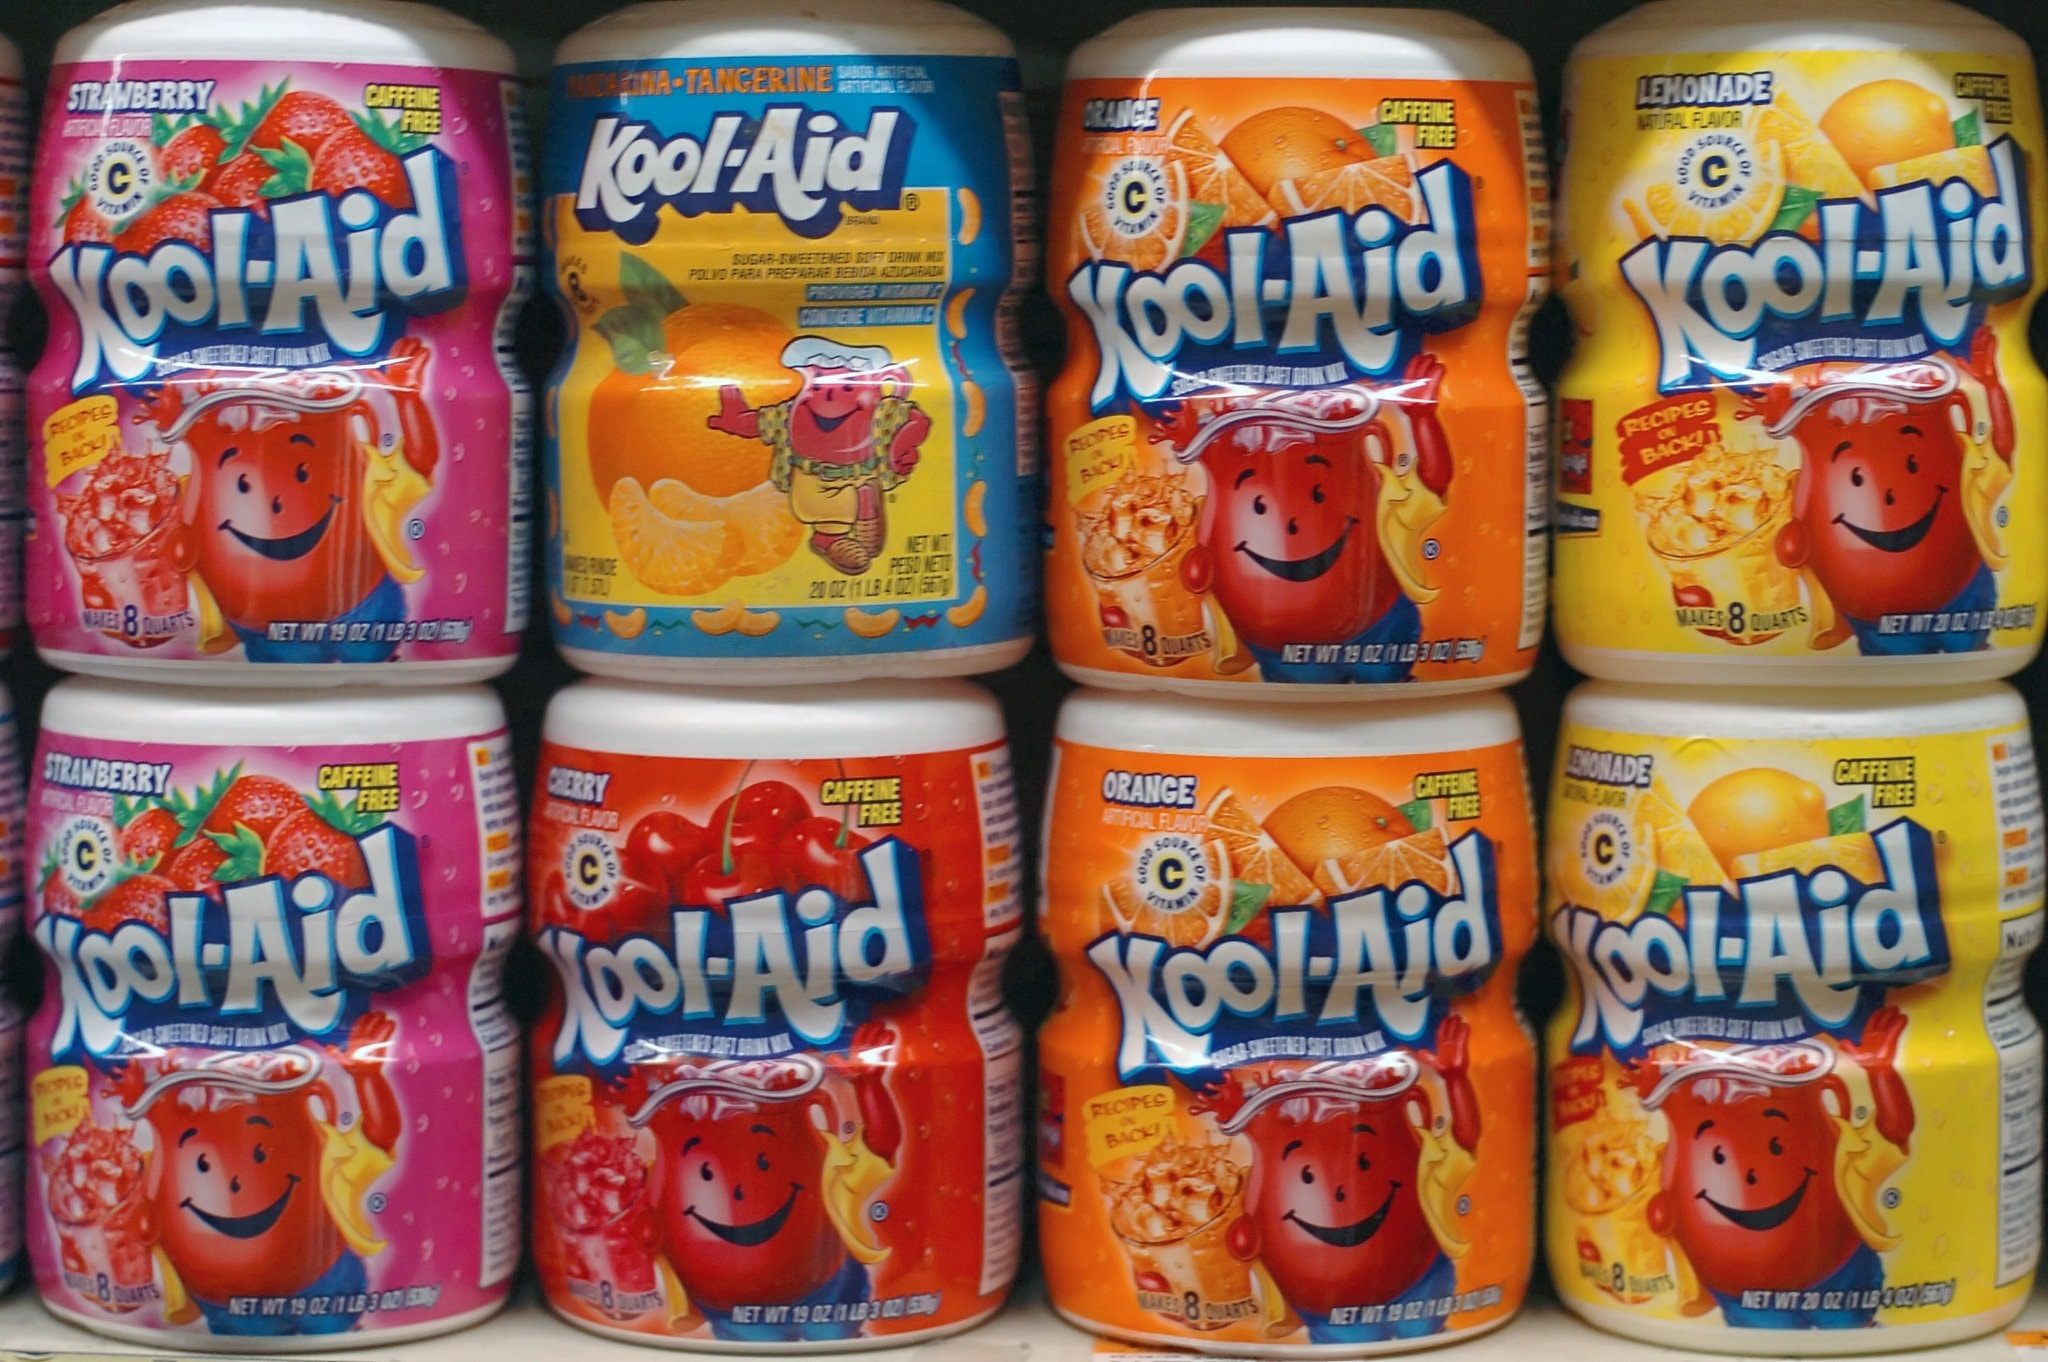 Kool-Aid containers on shelf